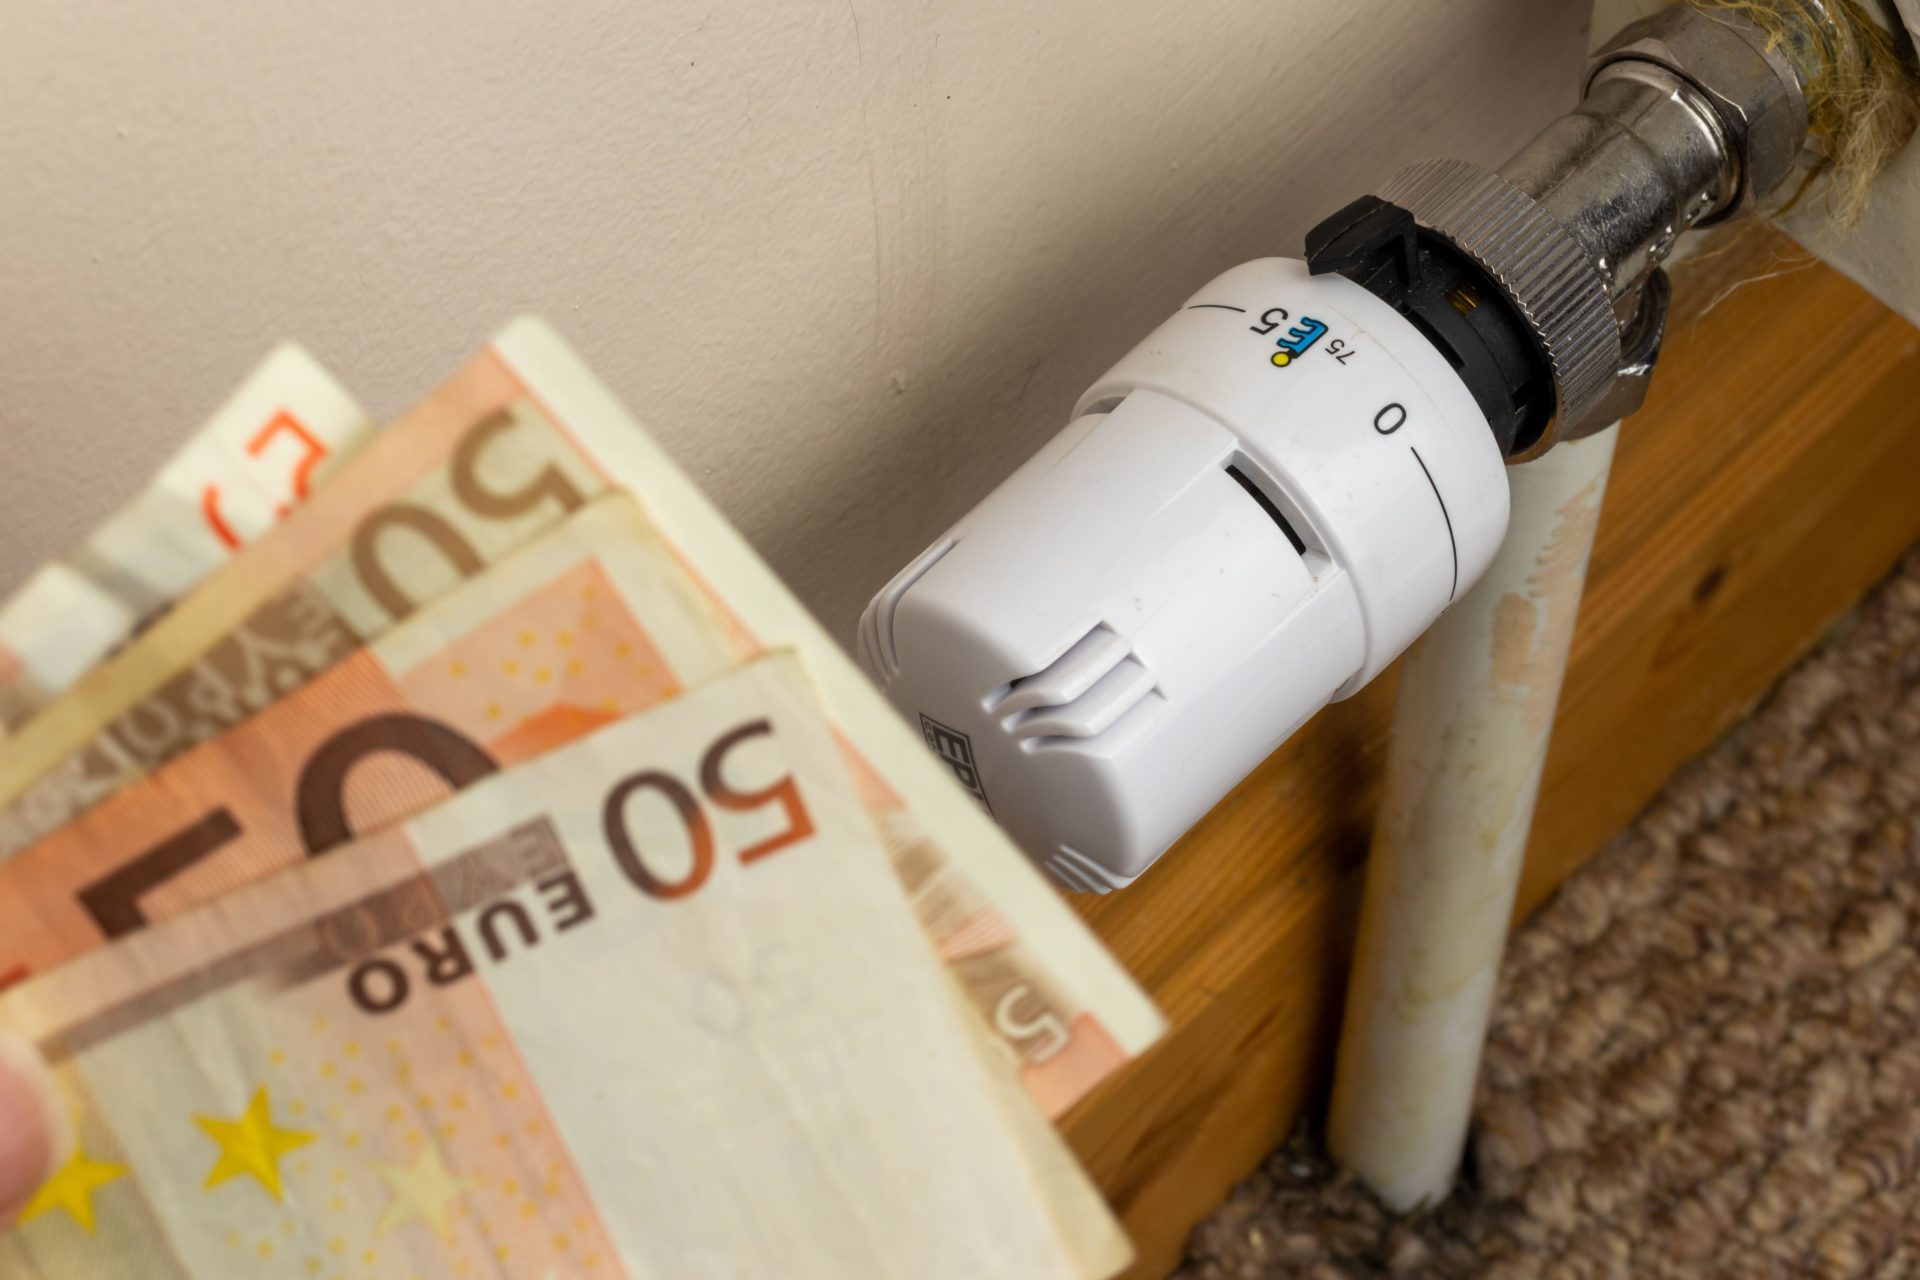 Euro banknotes beside a radiator.